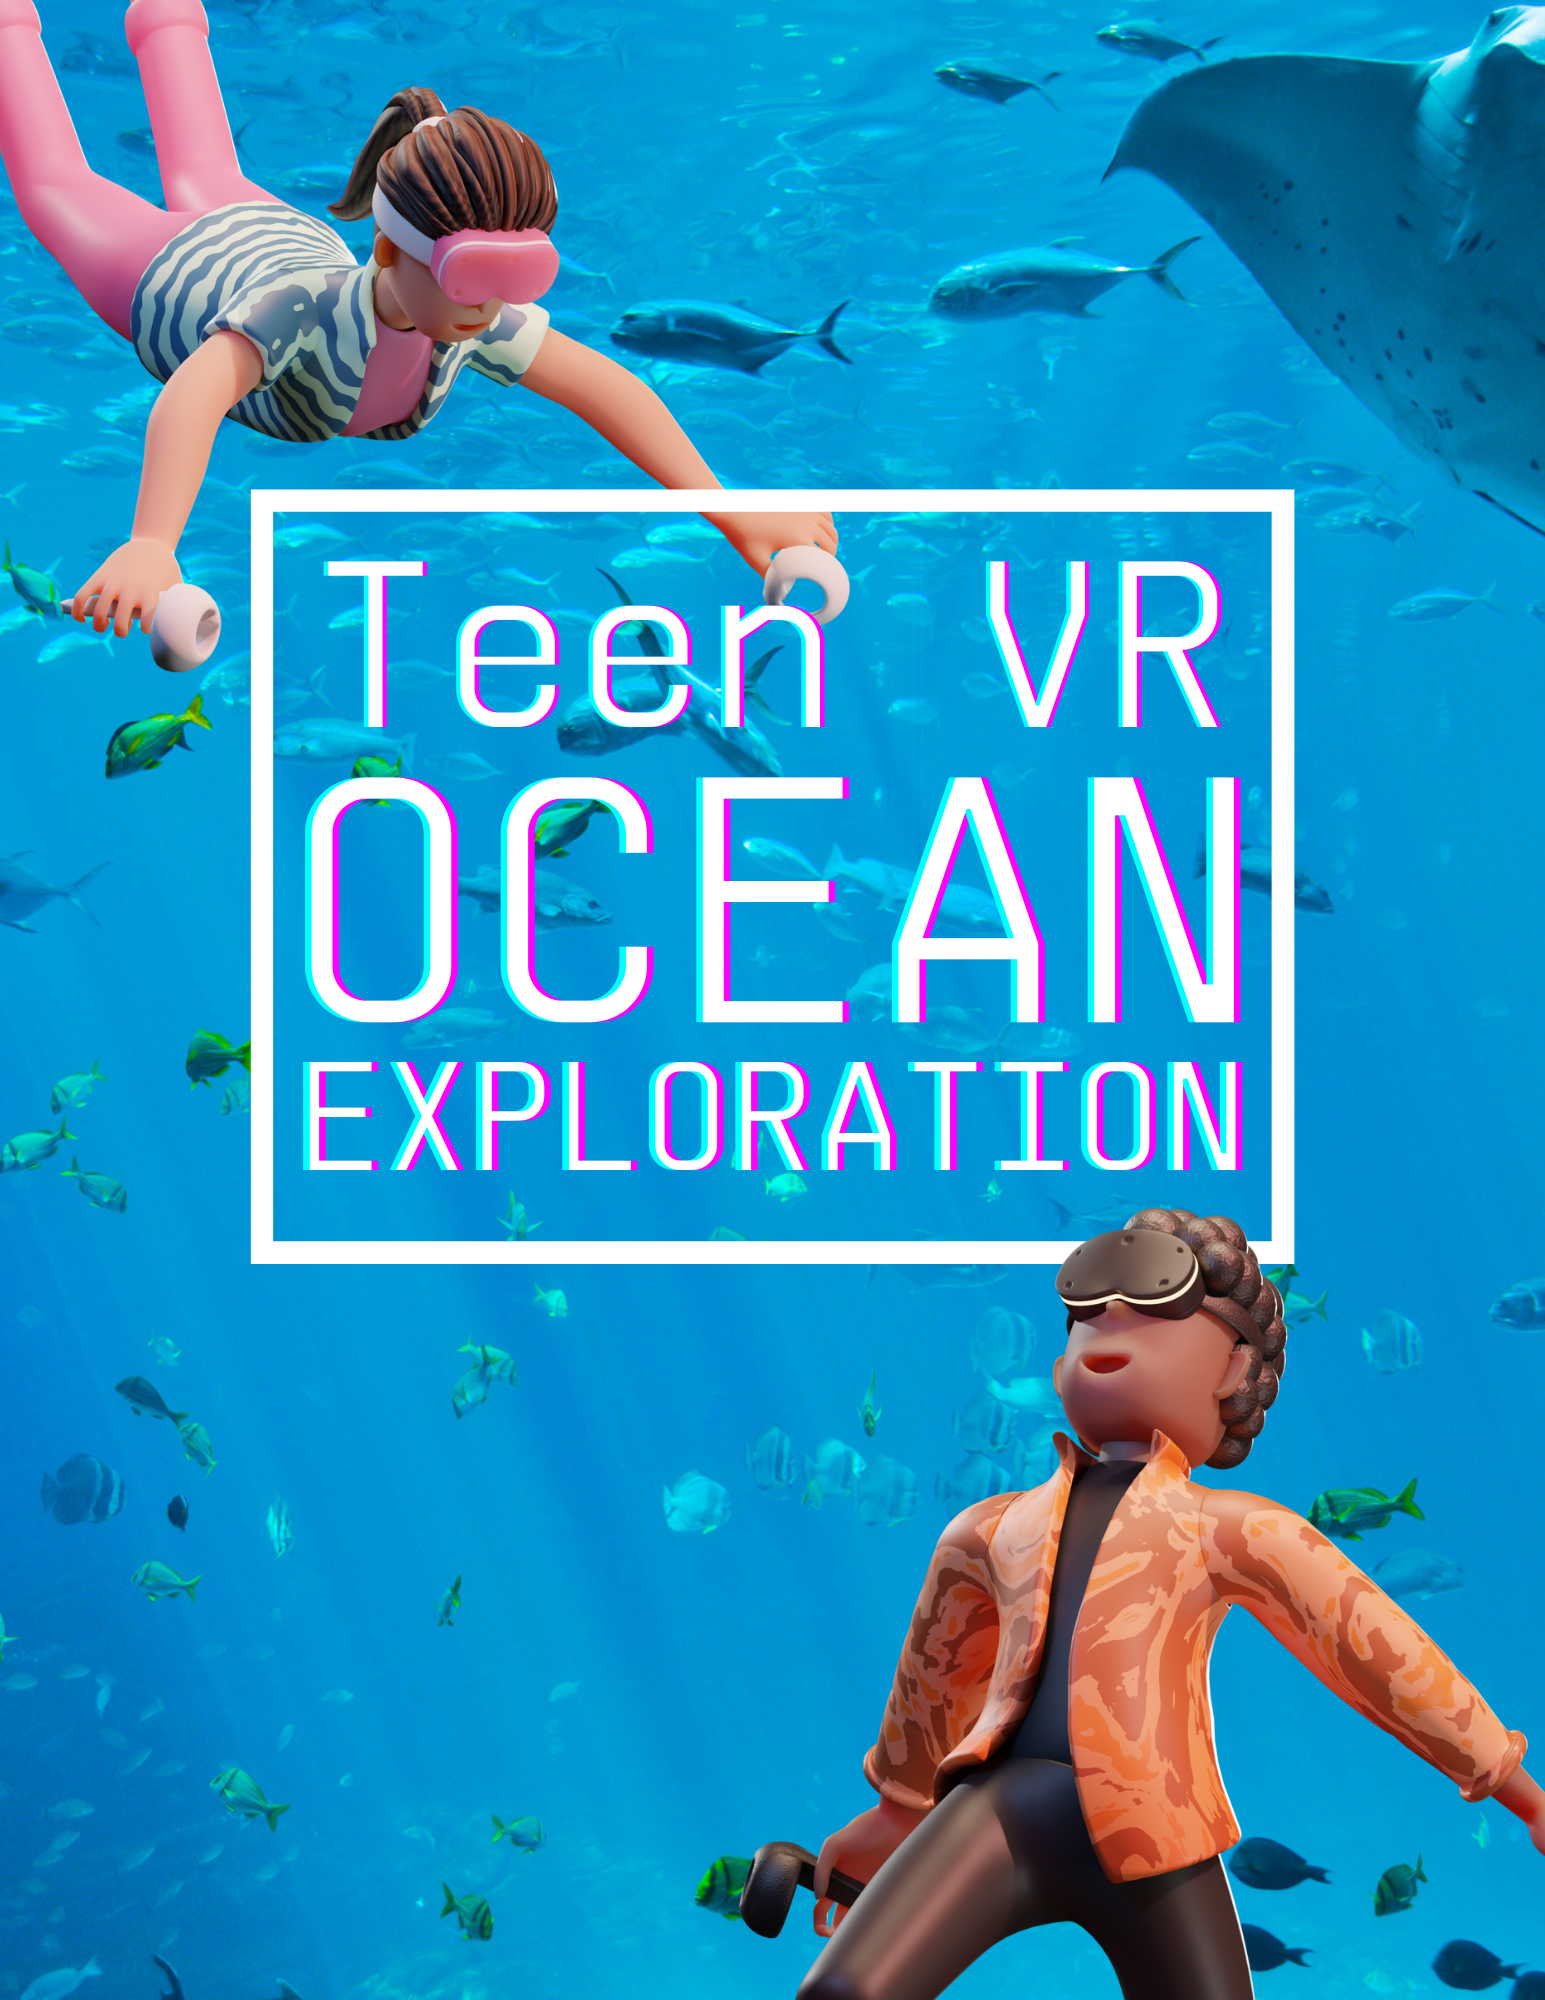 Teen VR Ocean Exploration